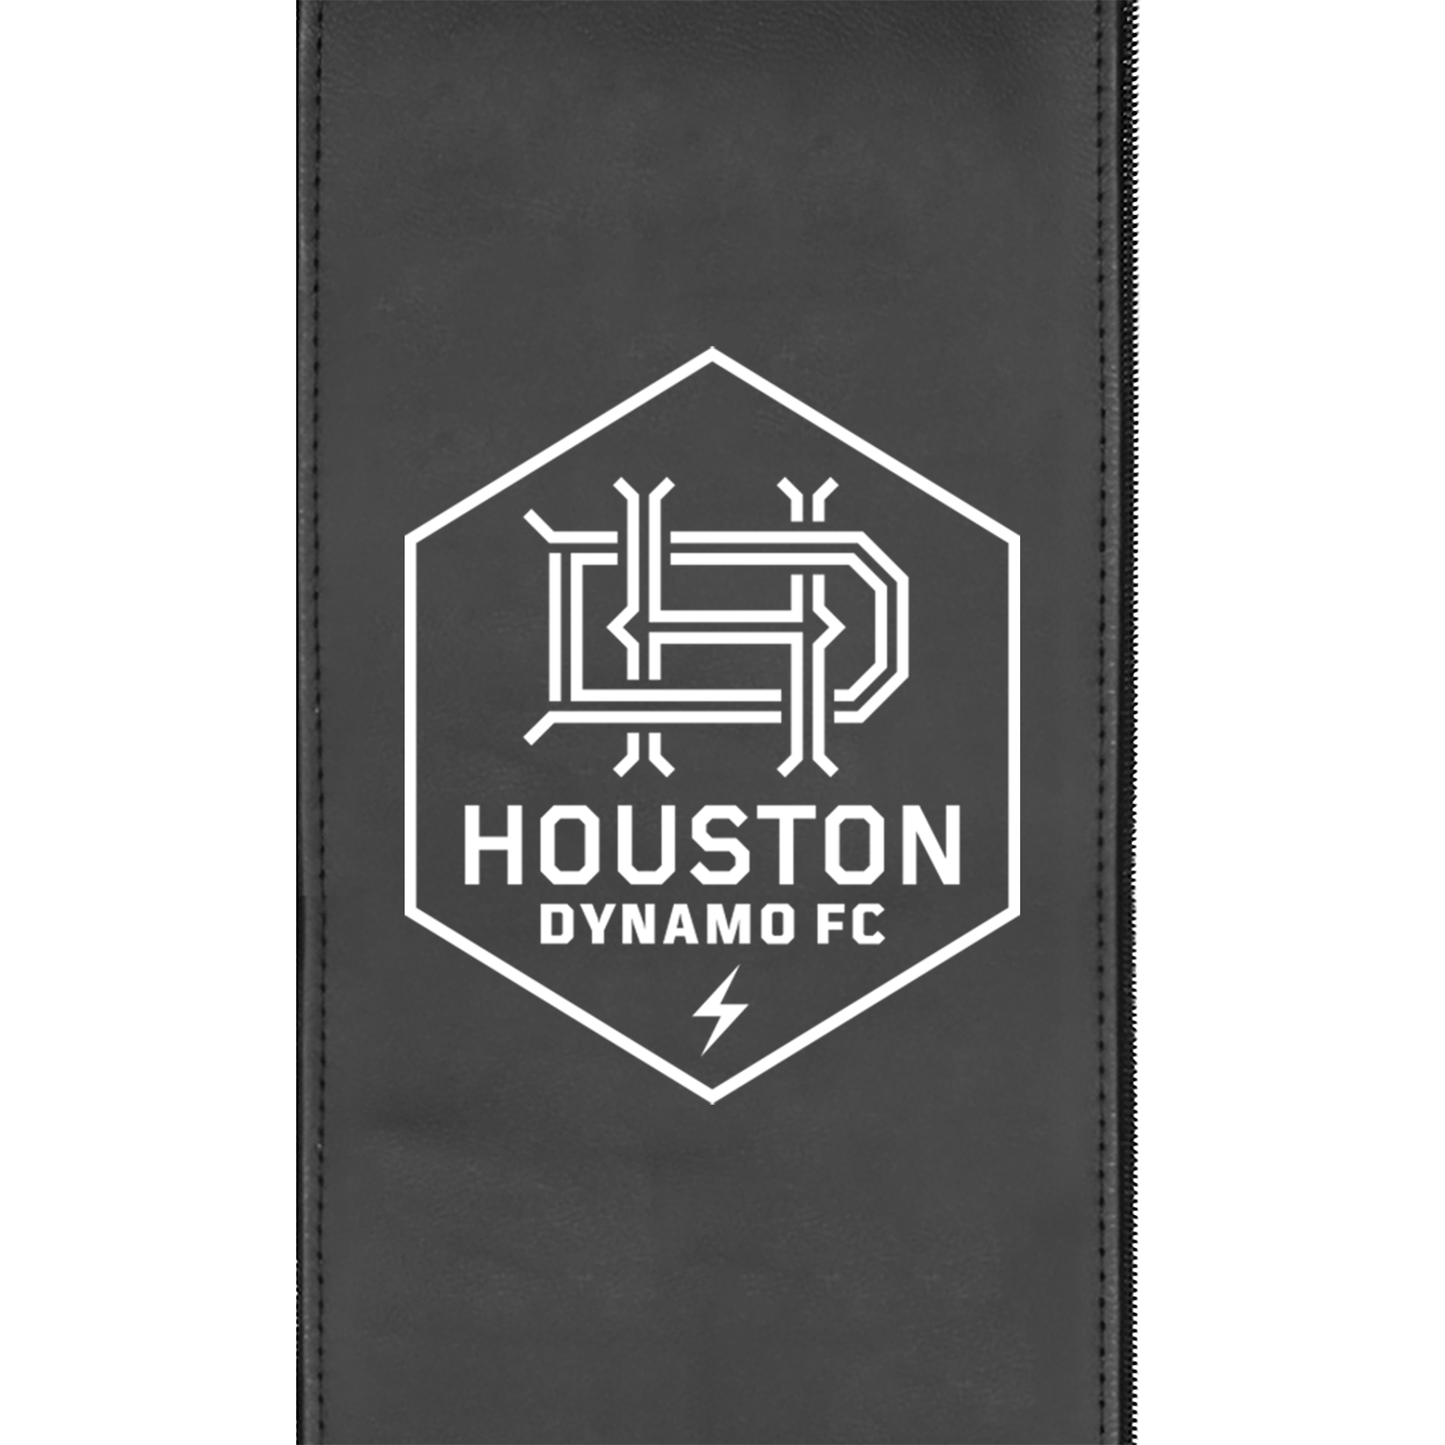 Curve Task Chair with Houston Dynamo Secondary Logo